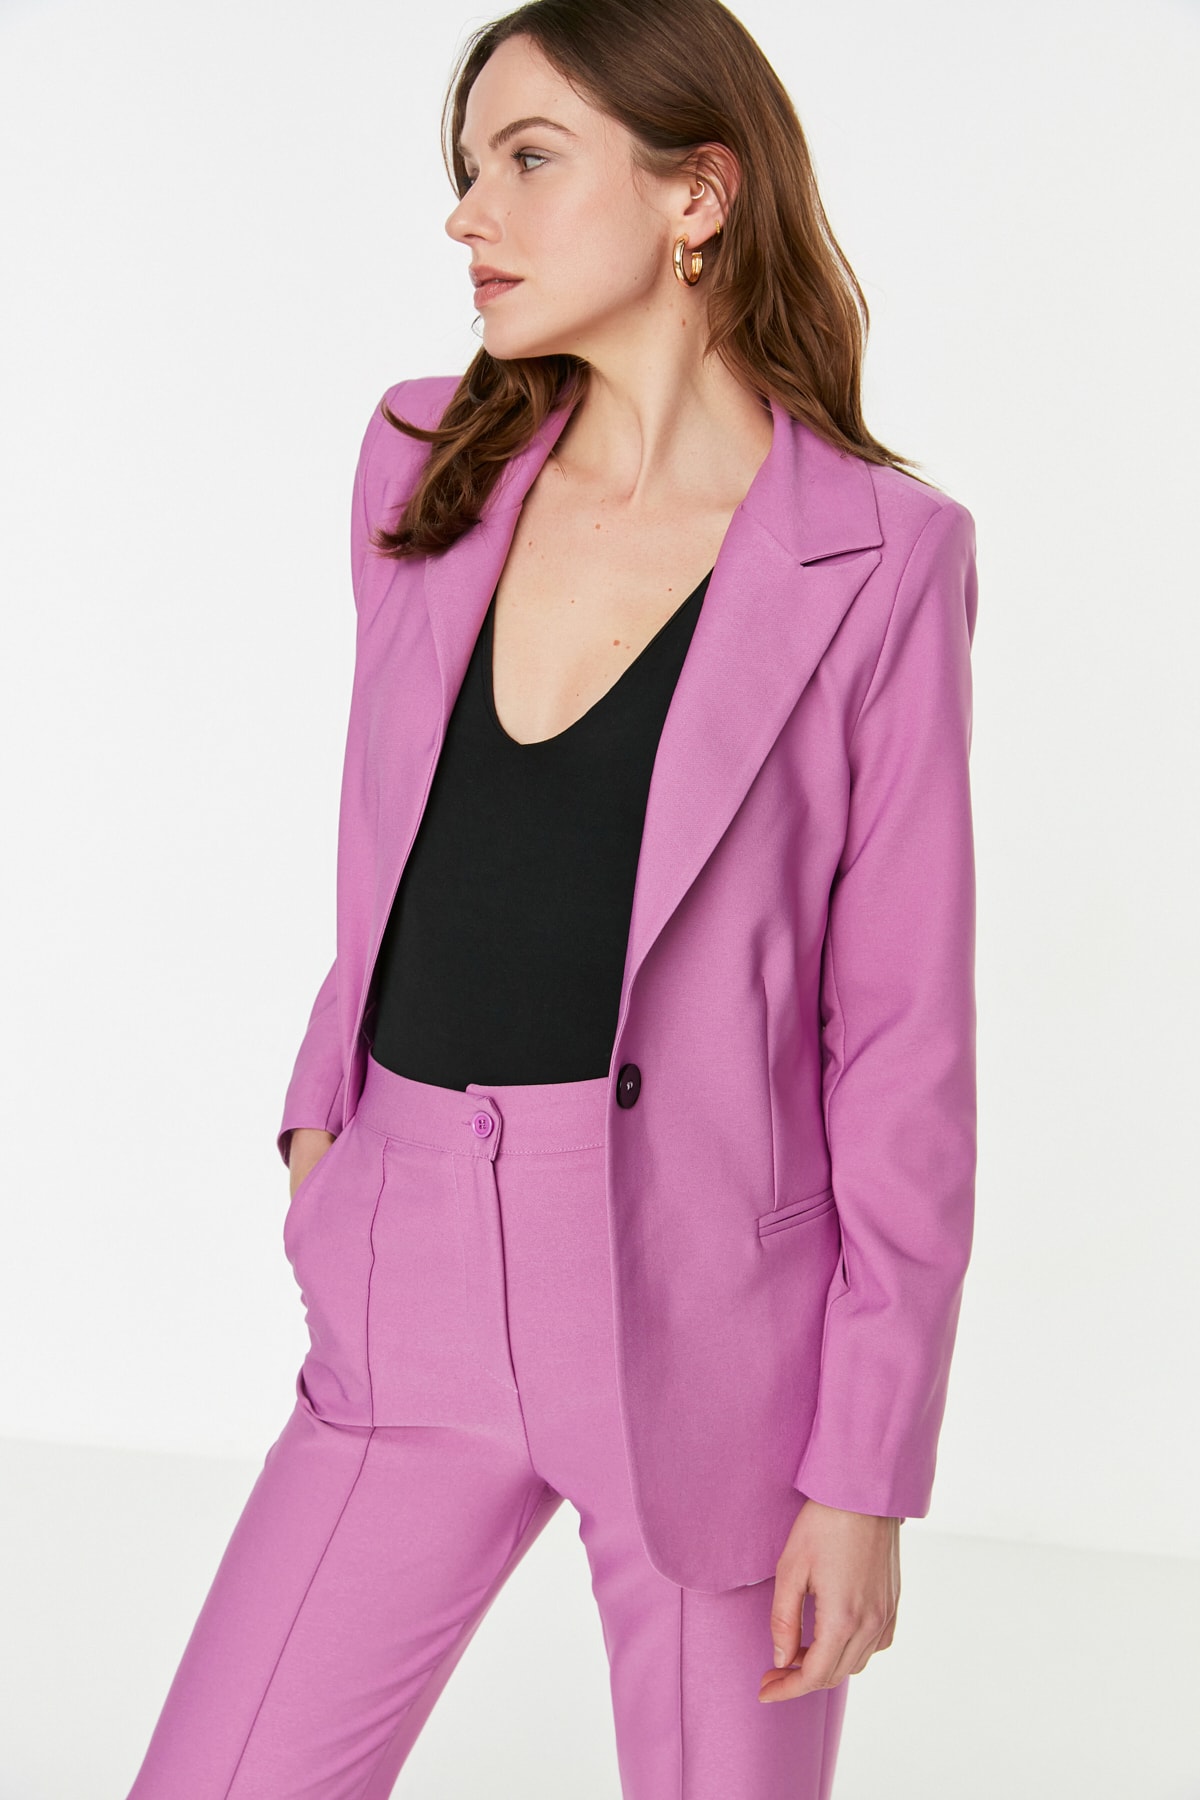 Trendyol Lilac Woven Buttoned Blazer Jacket